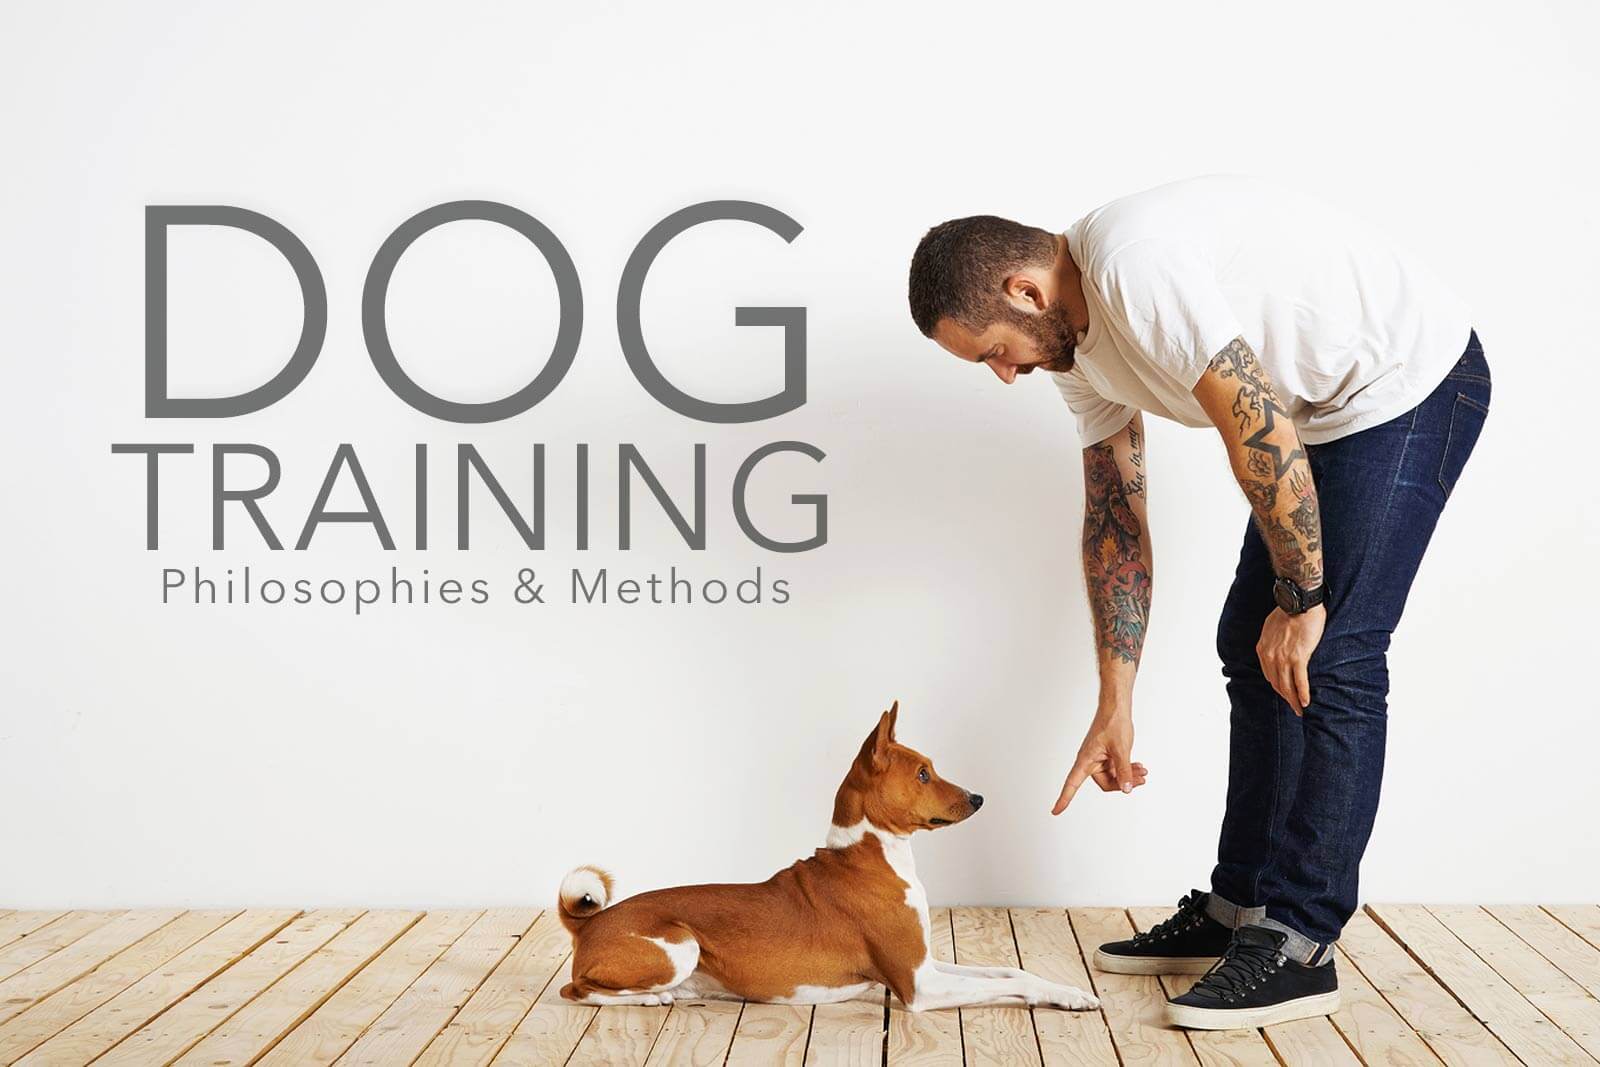 Dog Training Philosophies and Methods